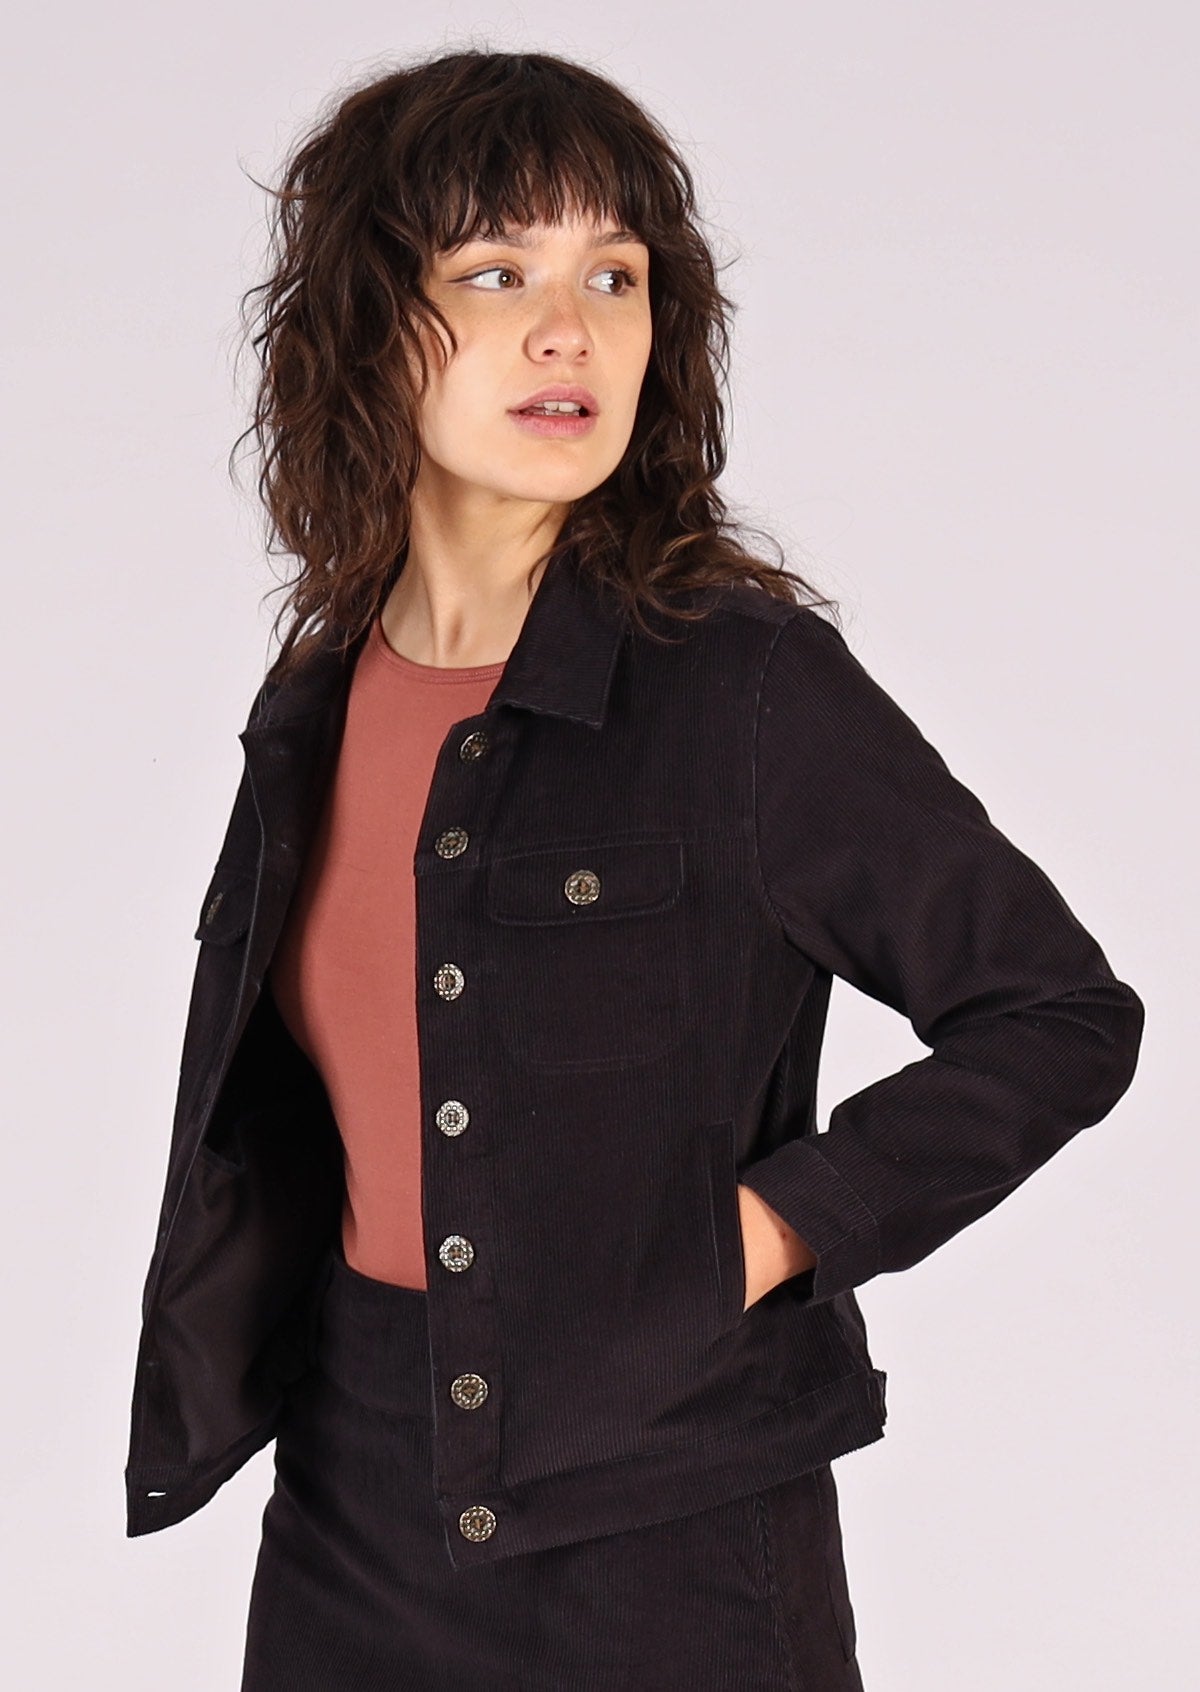 Cotton corduroy dark grey jacket with pockets